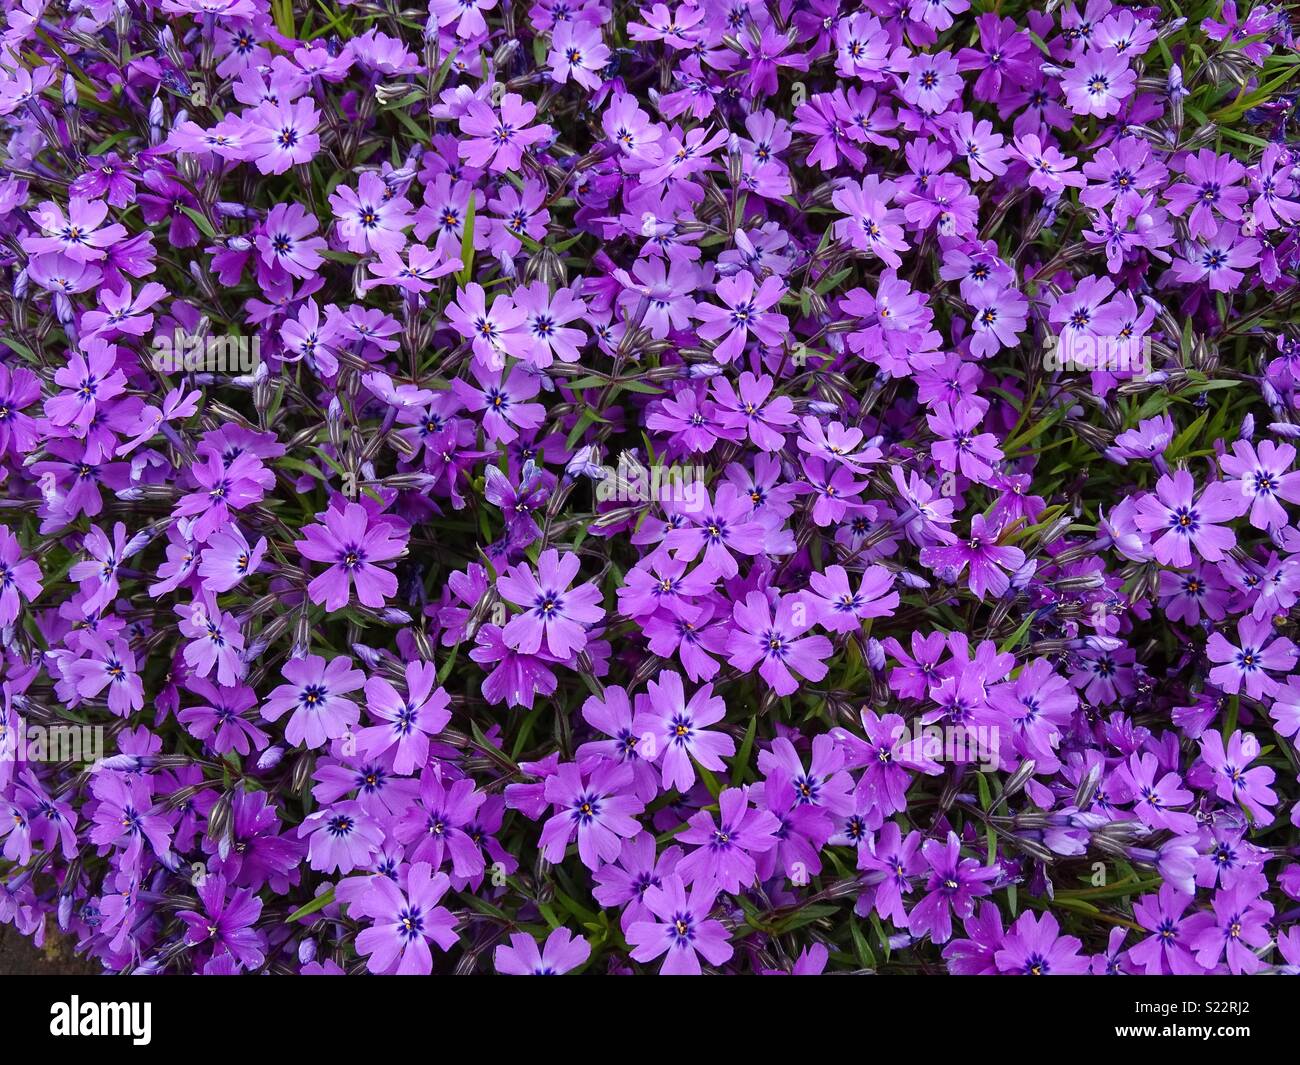 Alpine flowers Stock Photo